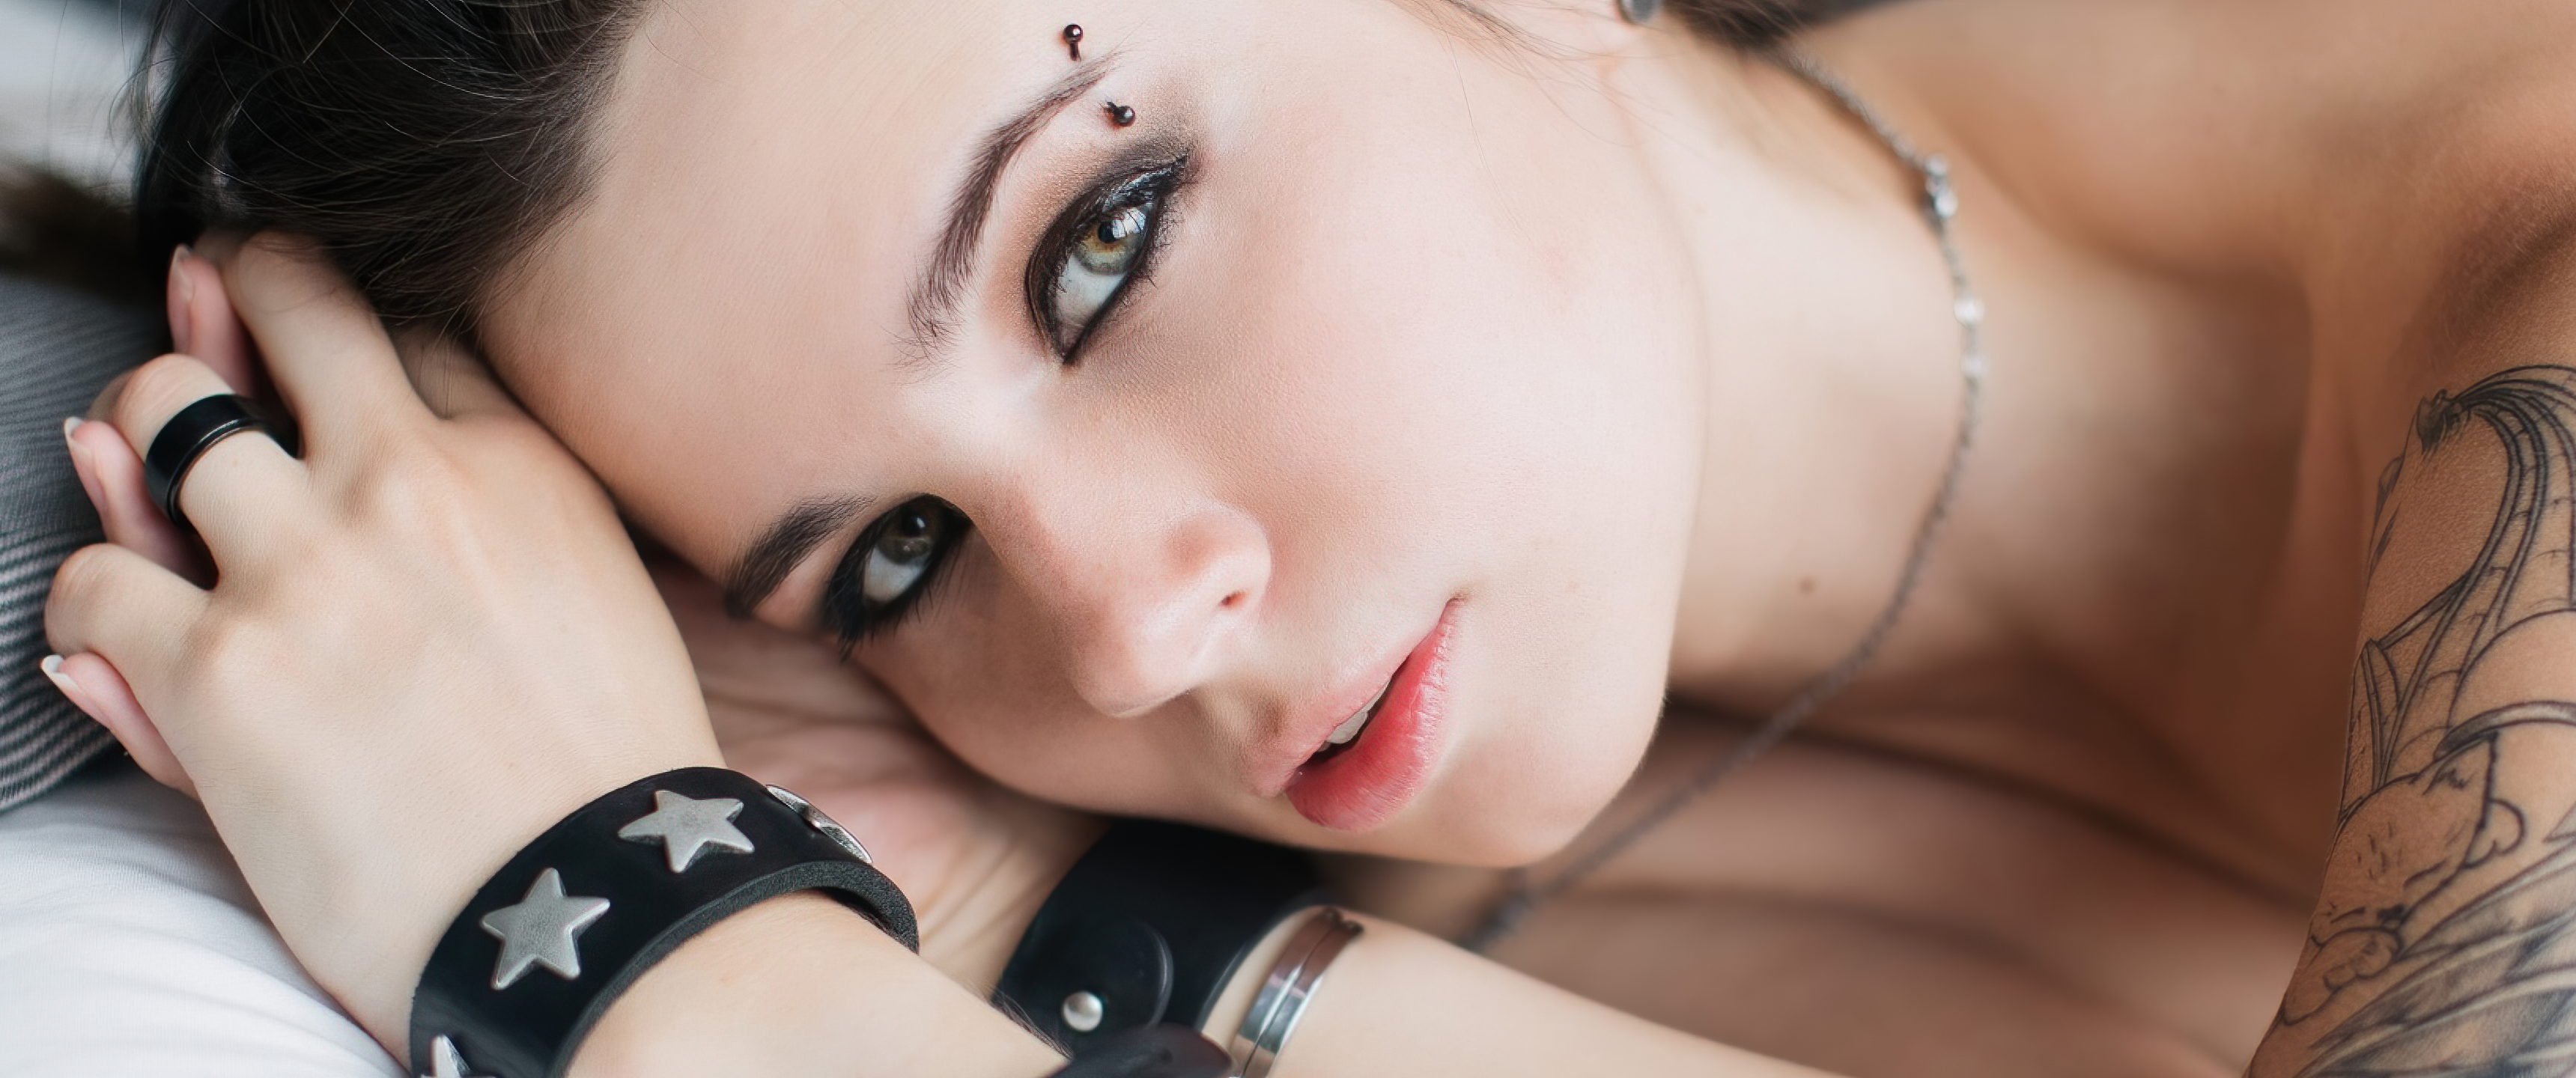 People 3440x1440 women face eyes pierced eyebrow closeup tattoo implied nude